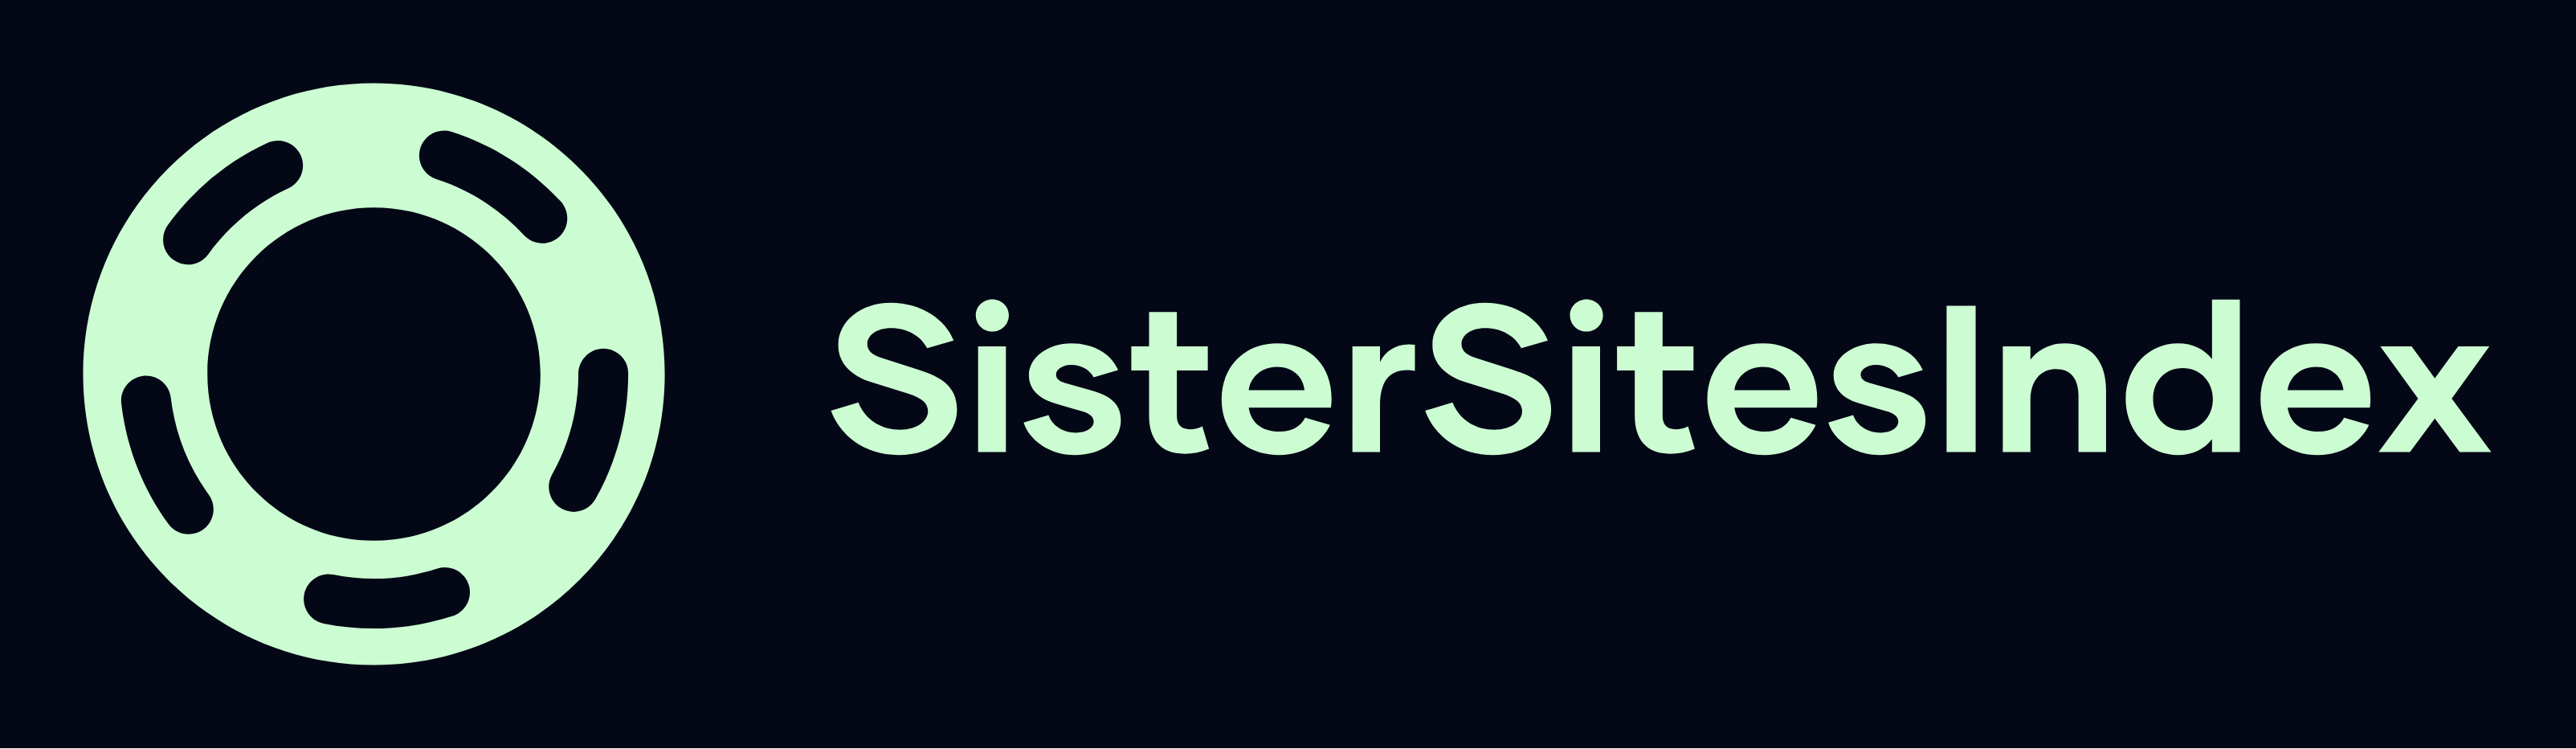 Sister Sister index